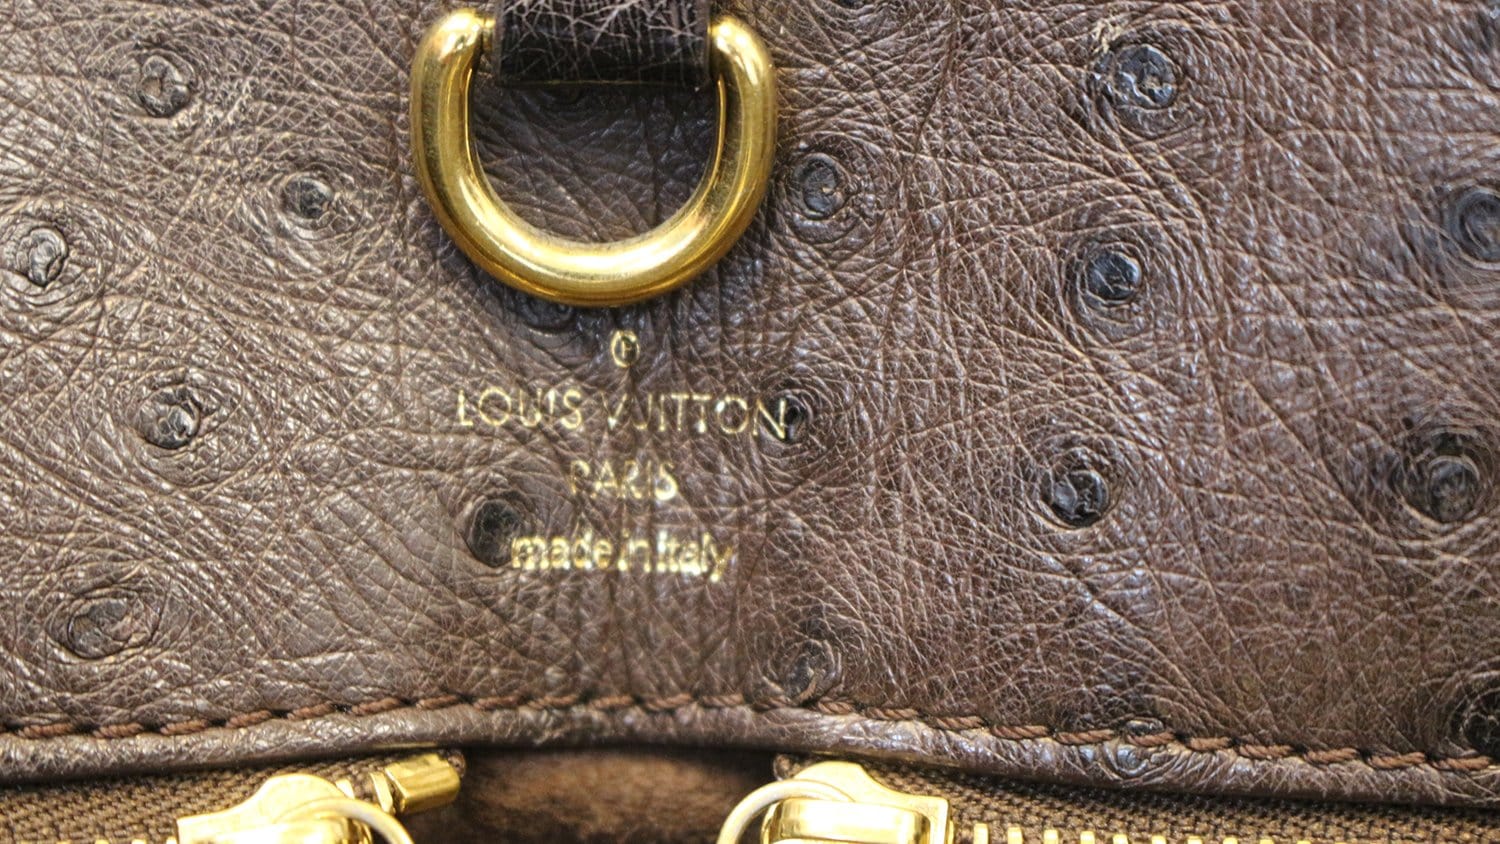 Louis Vuitton Etoile GM Quilted Monogram Wallet LV-W0128P-0004